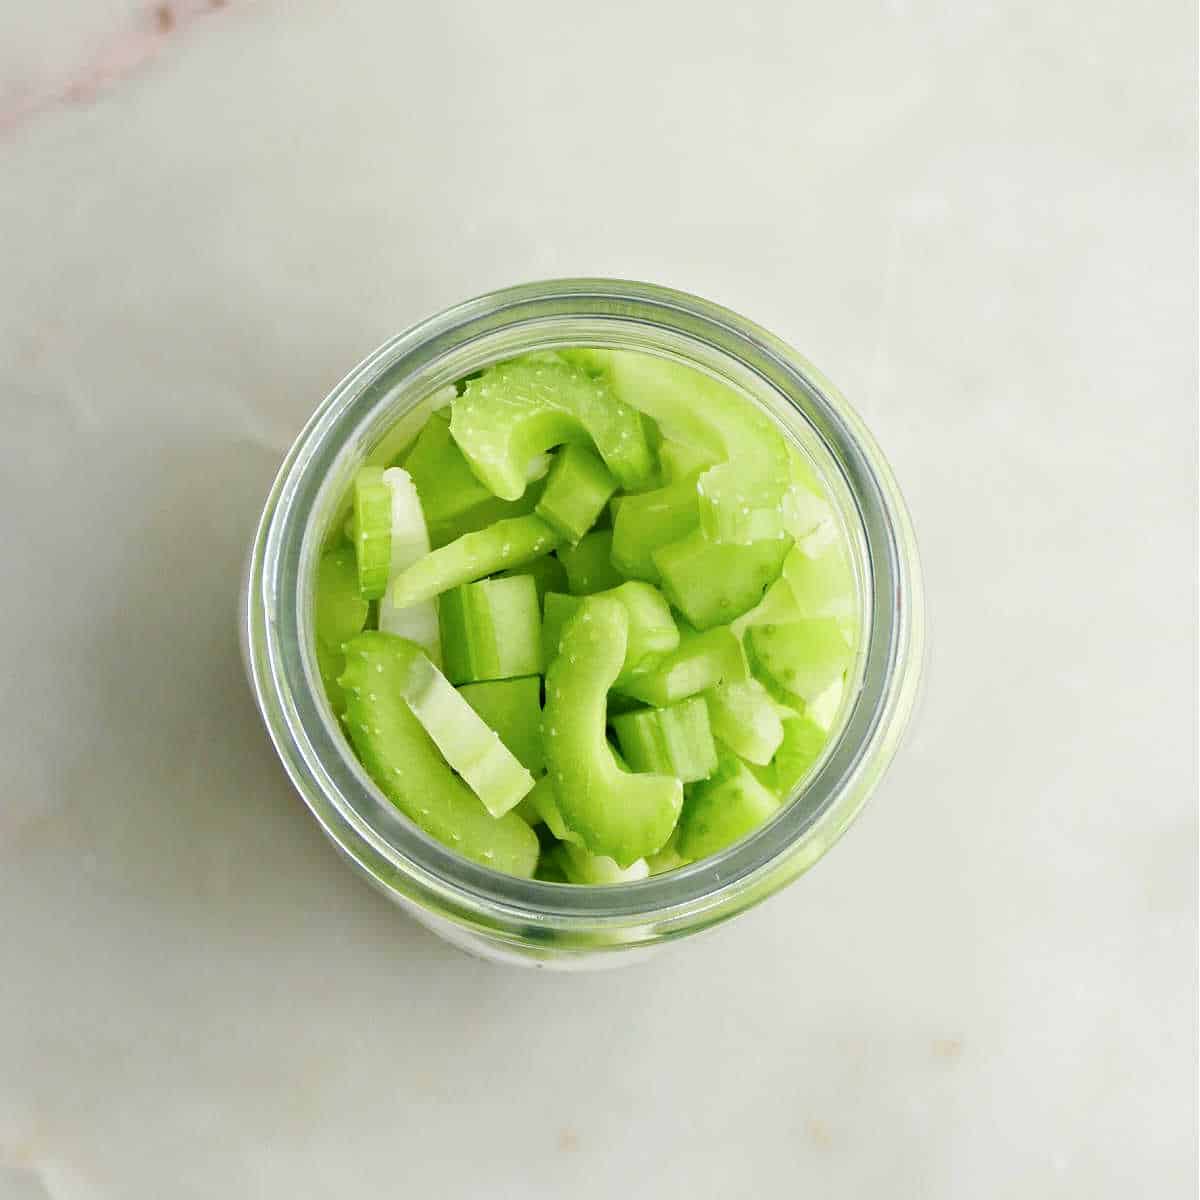 cut celery stuffed into a glass jar on a counter